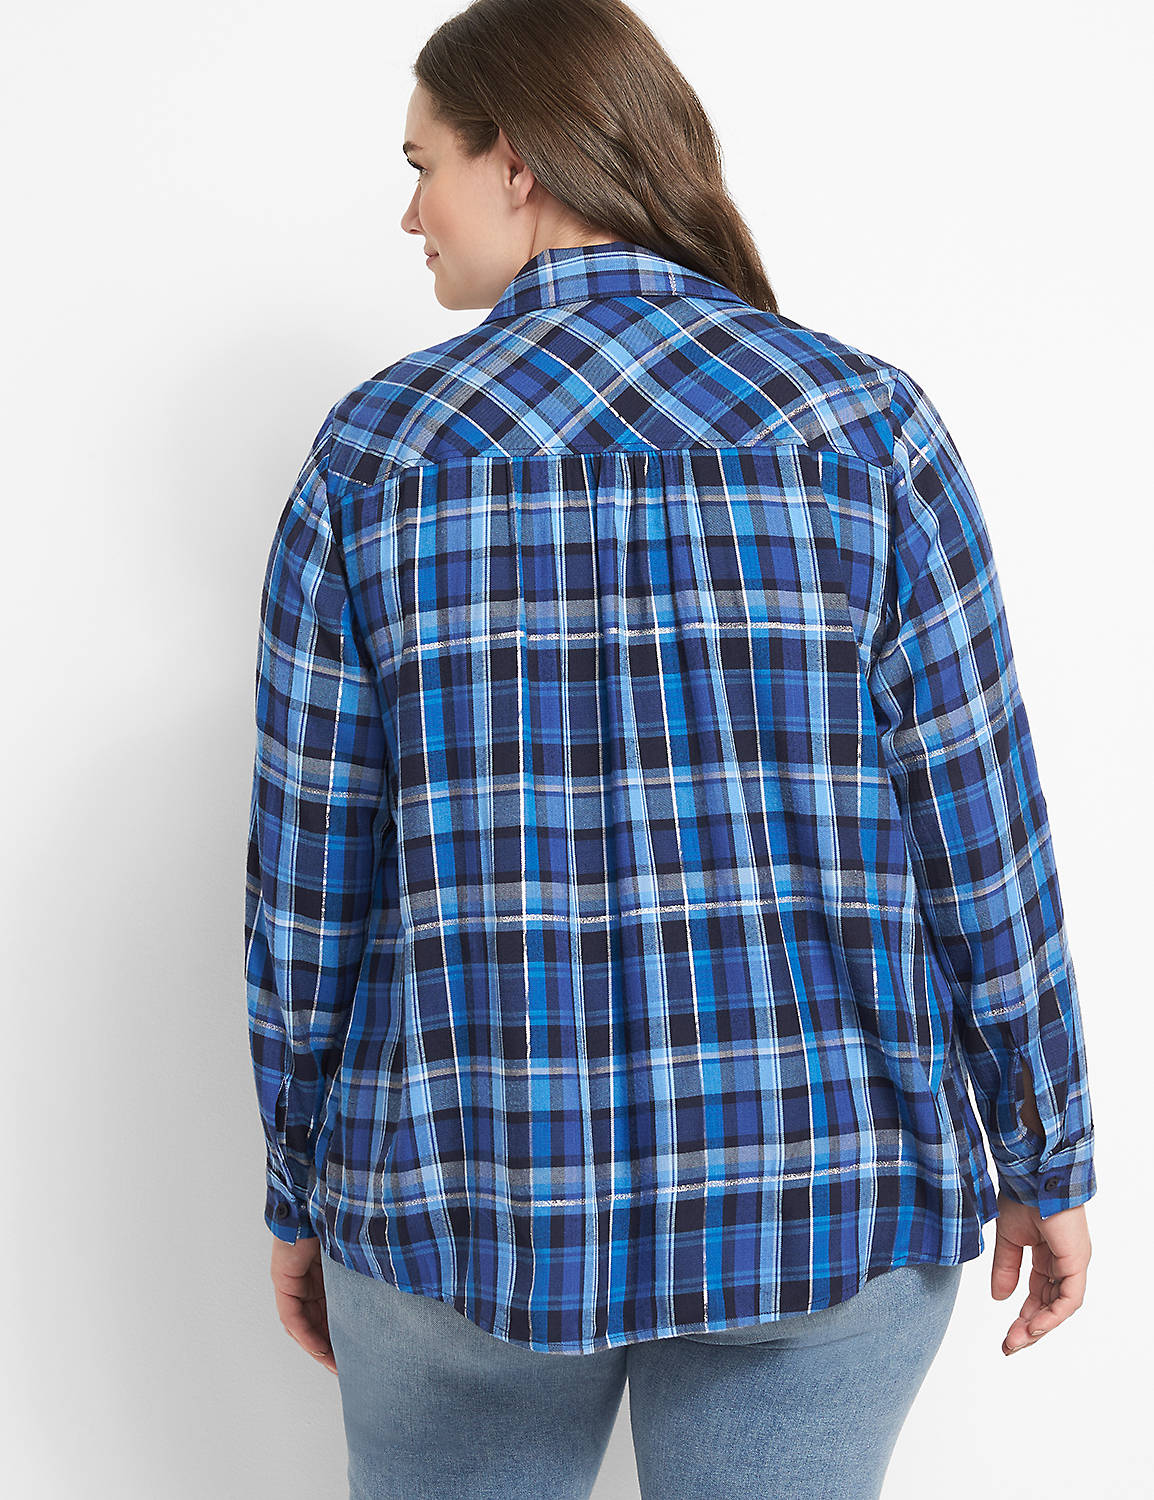 No-Peek Button-Front Metallic Plaid Boyfriend Shirt Product Image 2